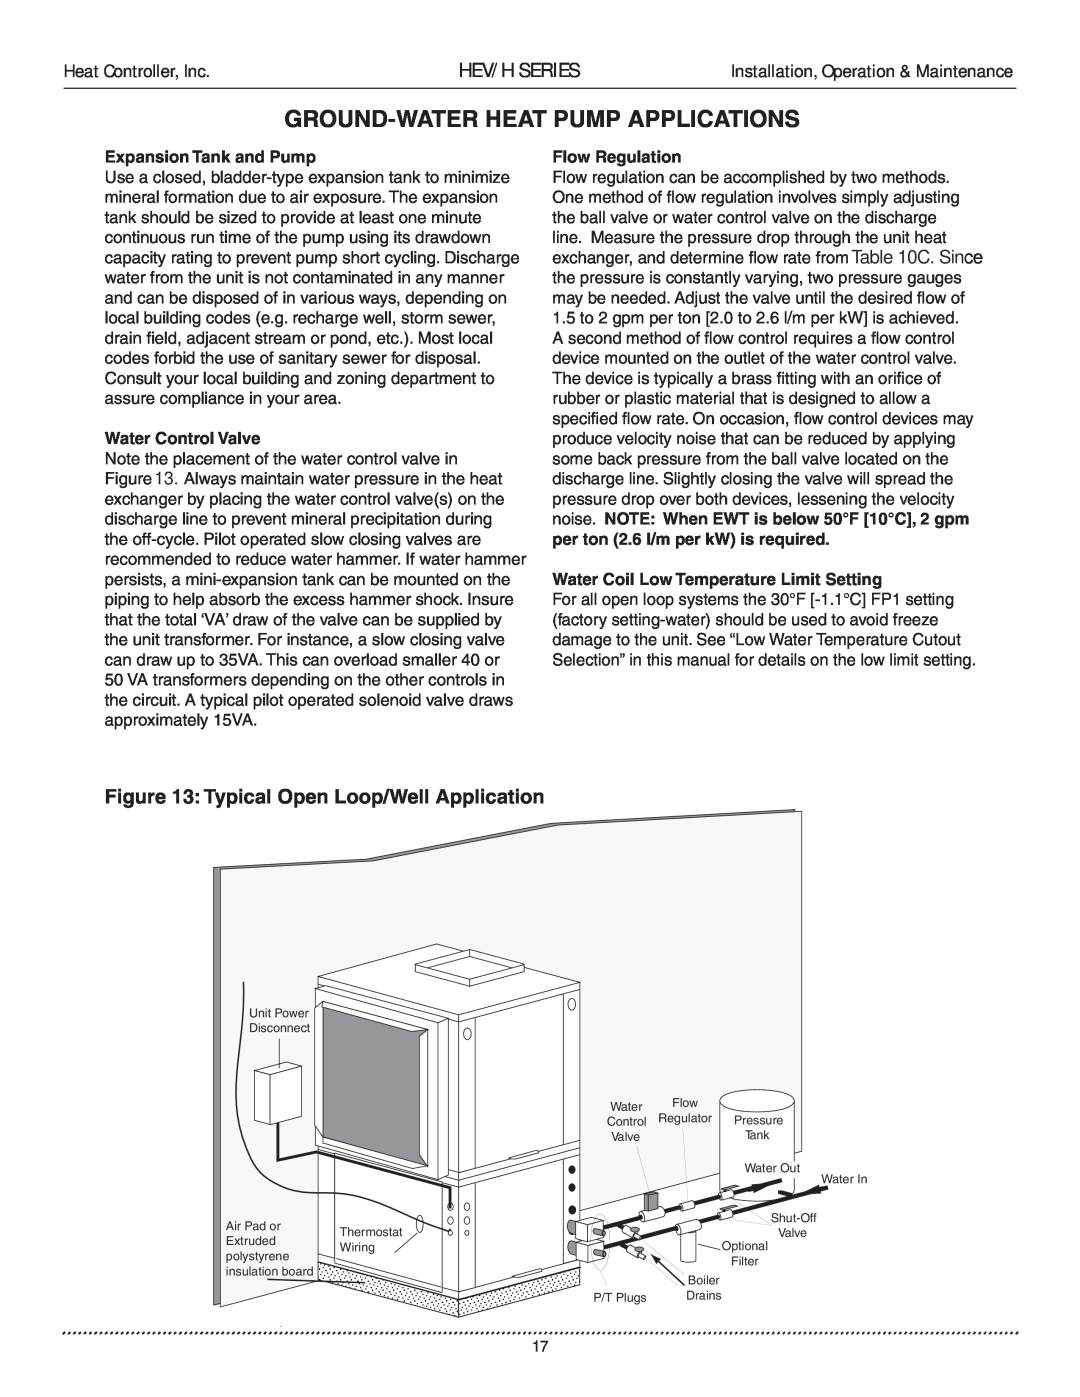 Heat Controller HEV/H manual Ground-Waterheat Pump Applications, Hev/H Series, Typical Open Loop/Well Application 